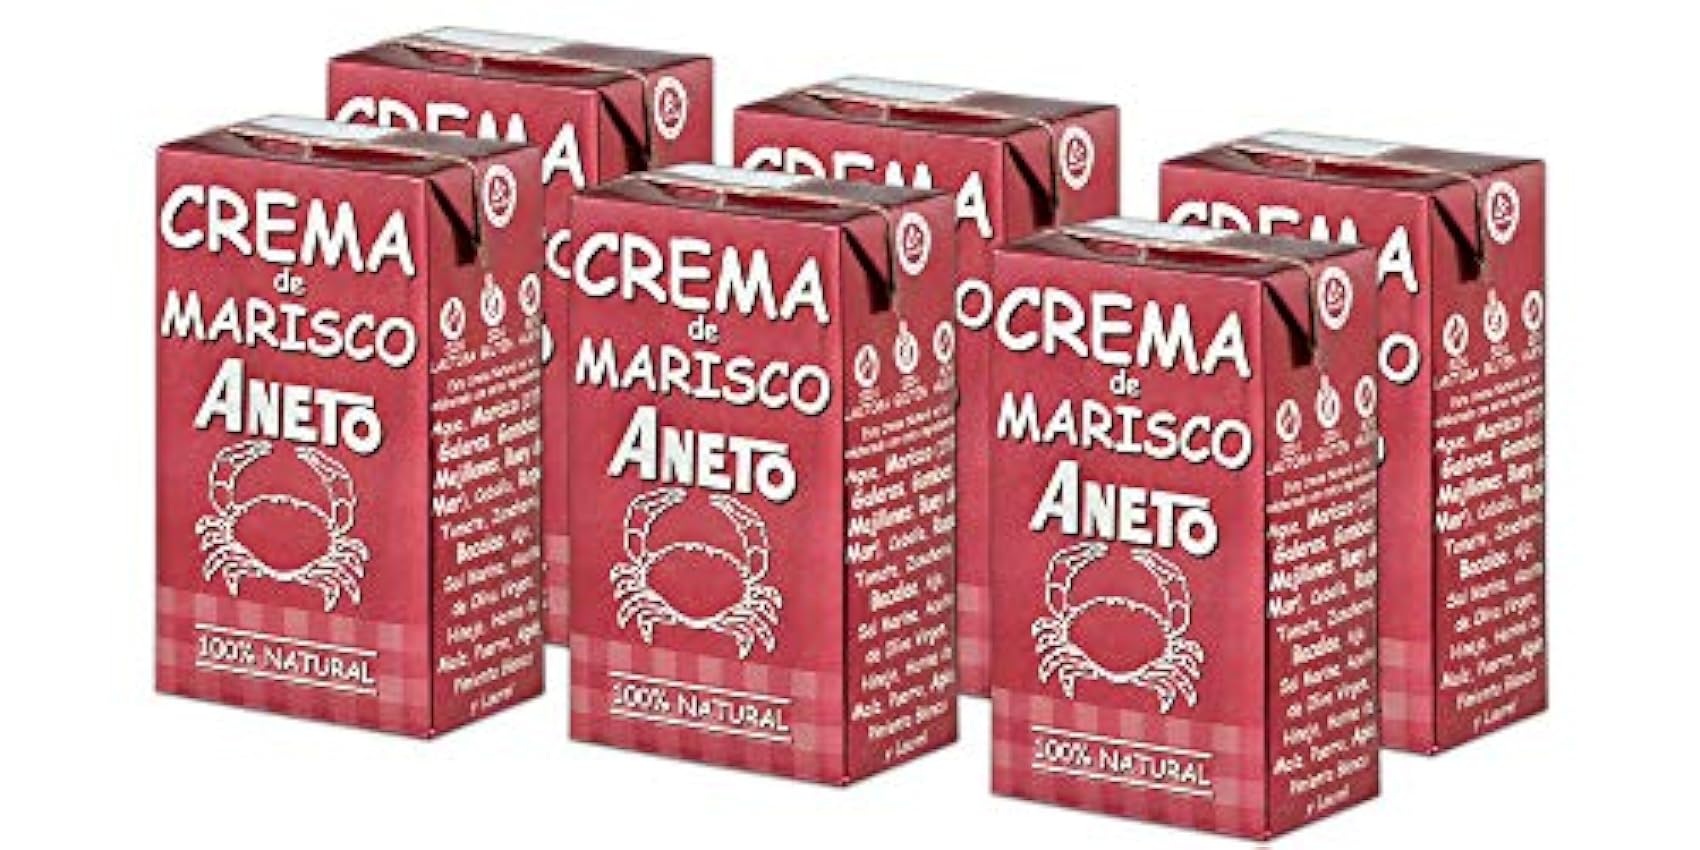 Aneto 100% Natural - Crema de Marisco - caja de 6 unidades de 1L j2epV4Fd